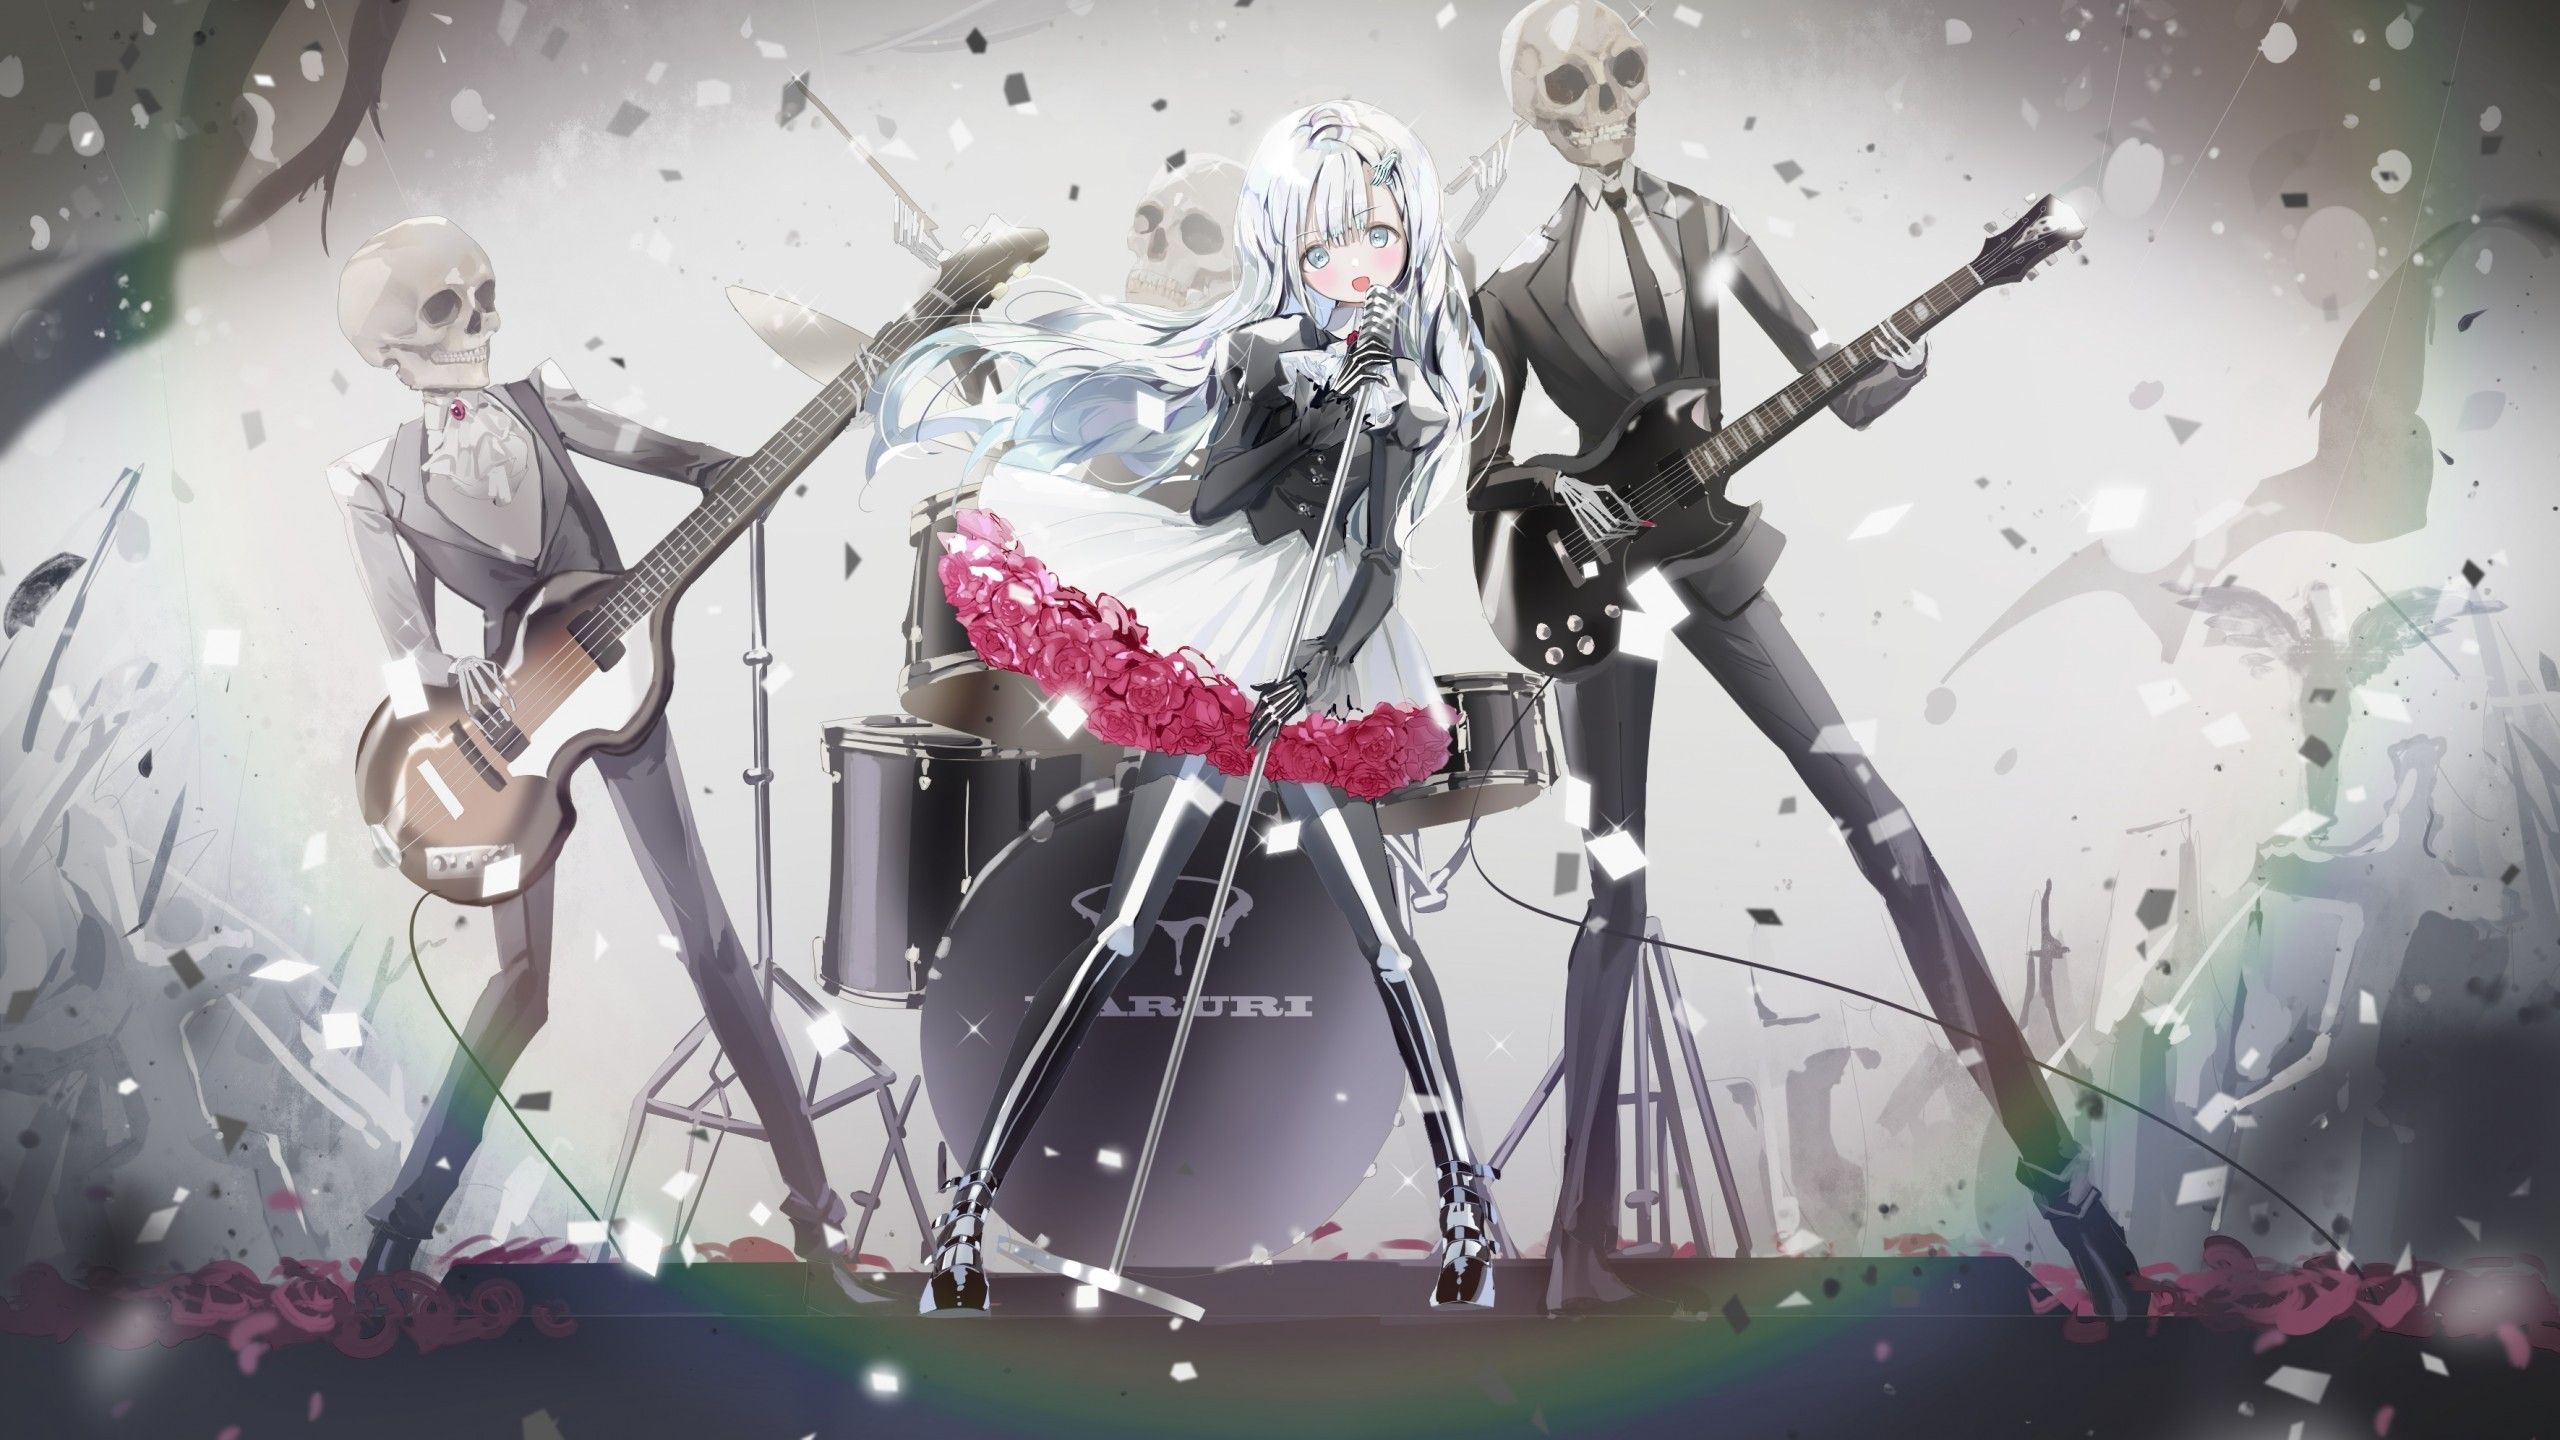 Anime Rock Band, Skeleton Members, Girl, Lolita, Gothic